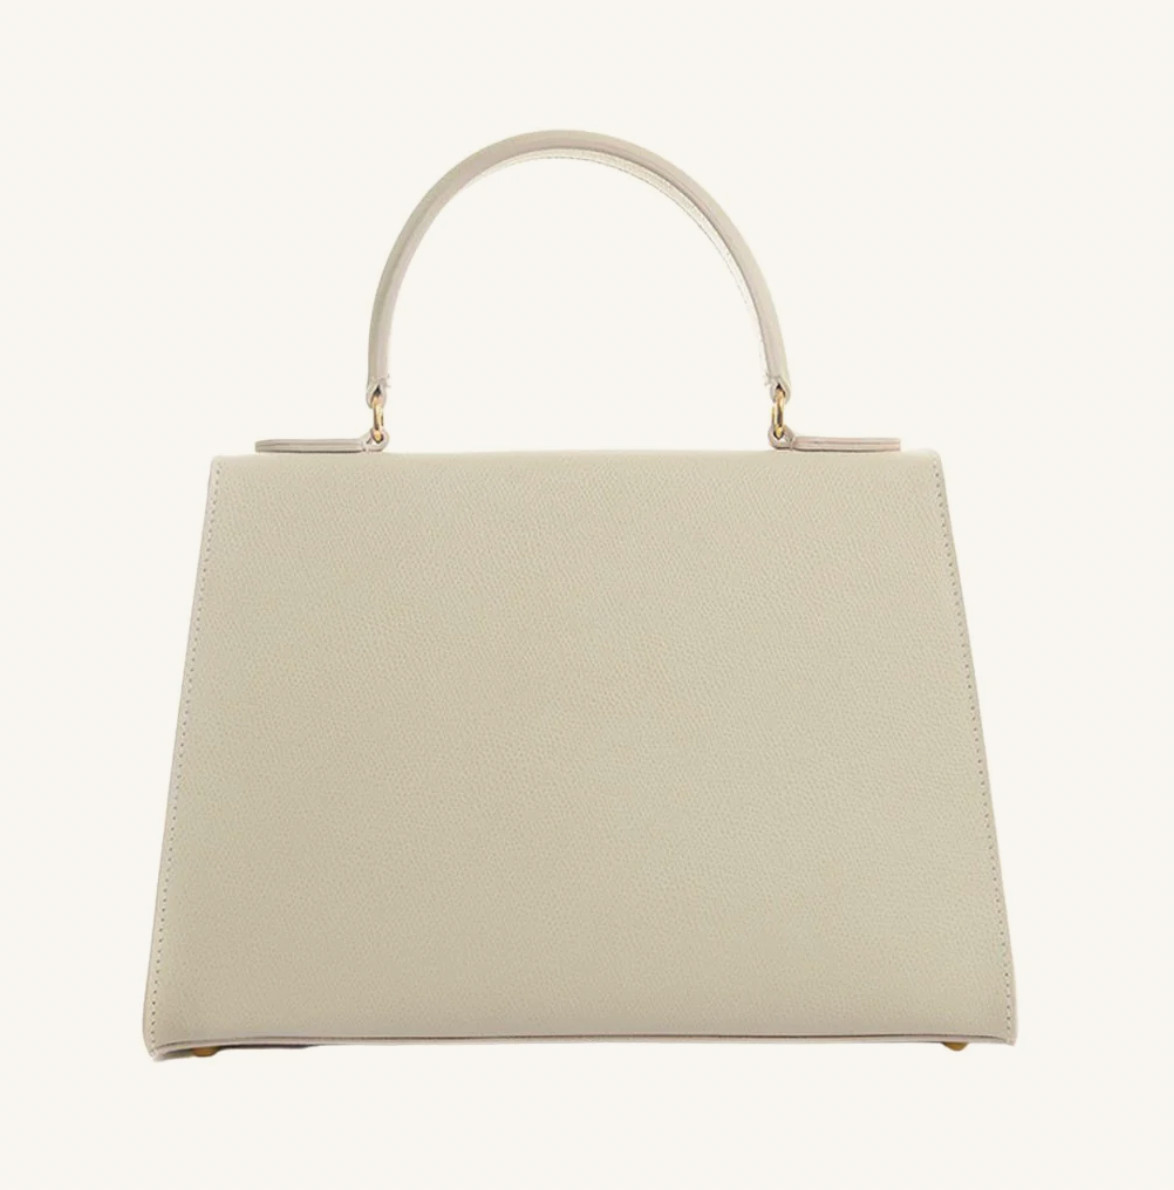 Carbotti handbags - Timeless Italian designs